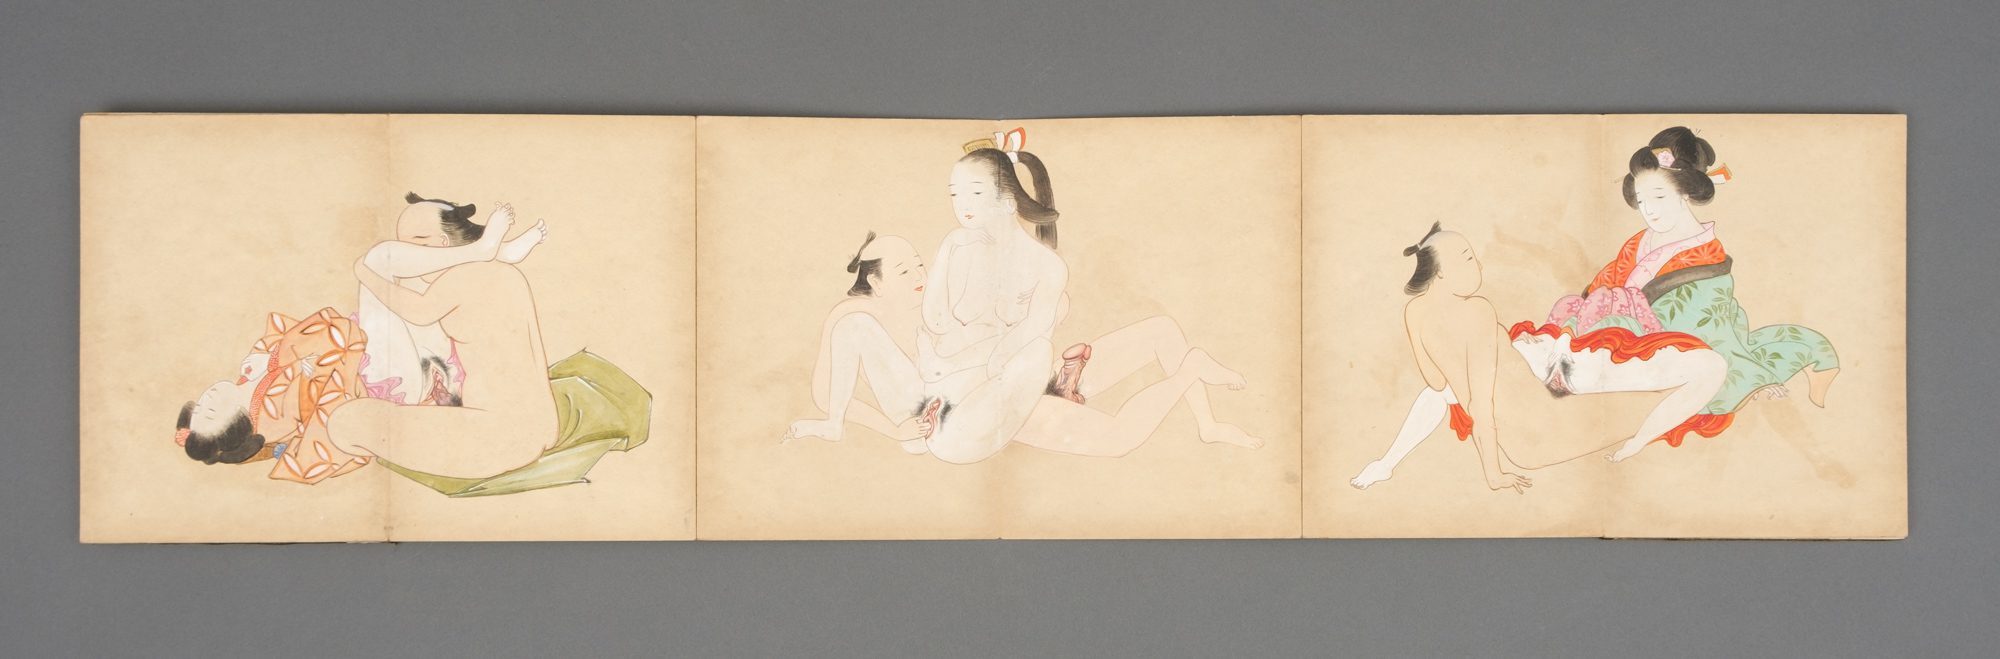 A JAPANESE EROTIC BOOK “SHUNGA”, 1912-1926 (TAISHO PERIOD) - Image 11 of 29